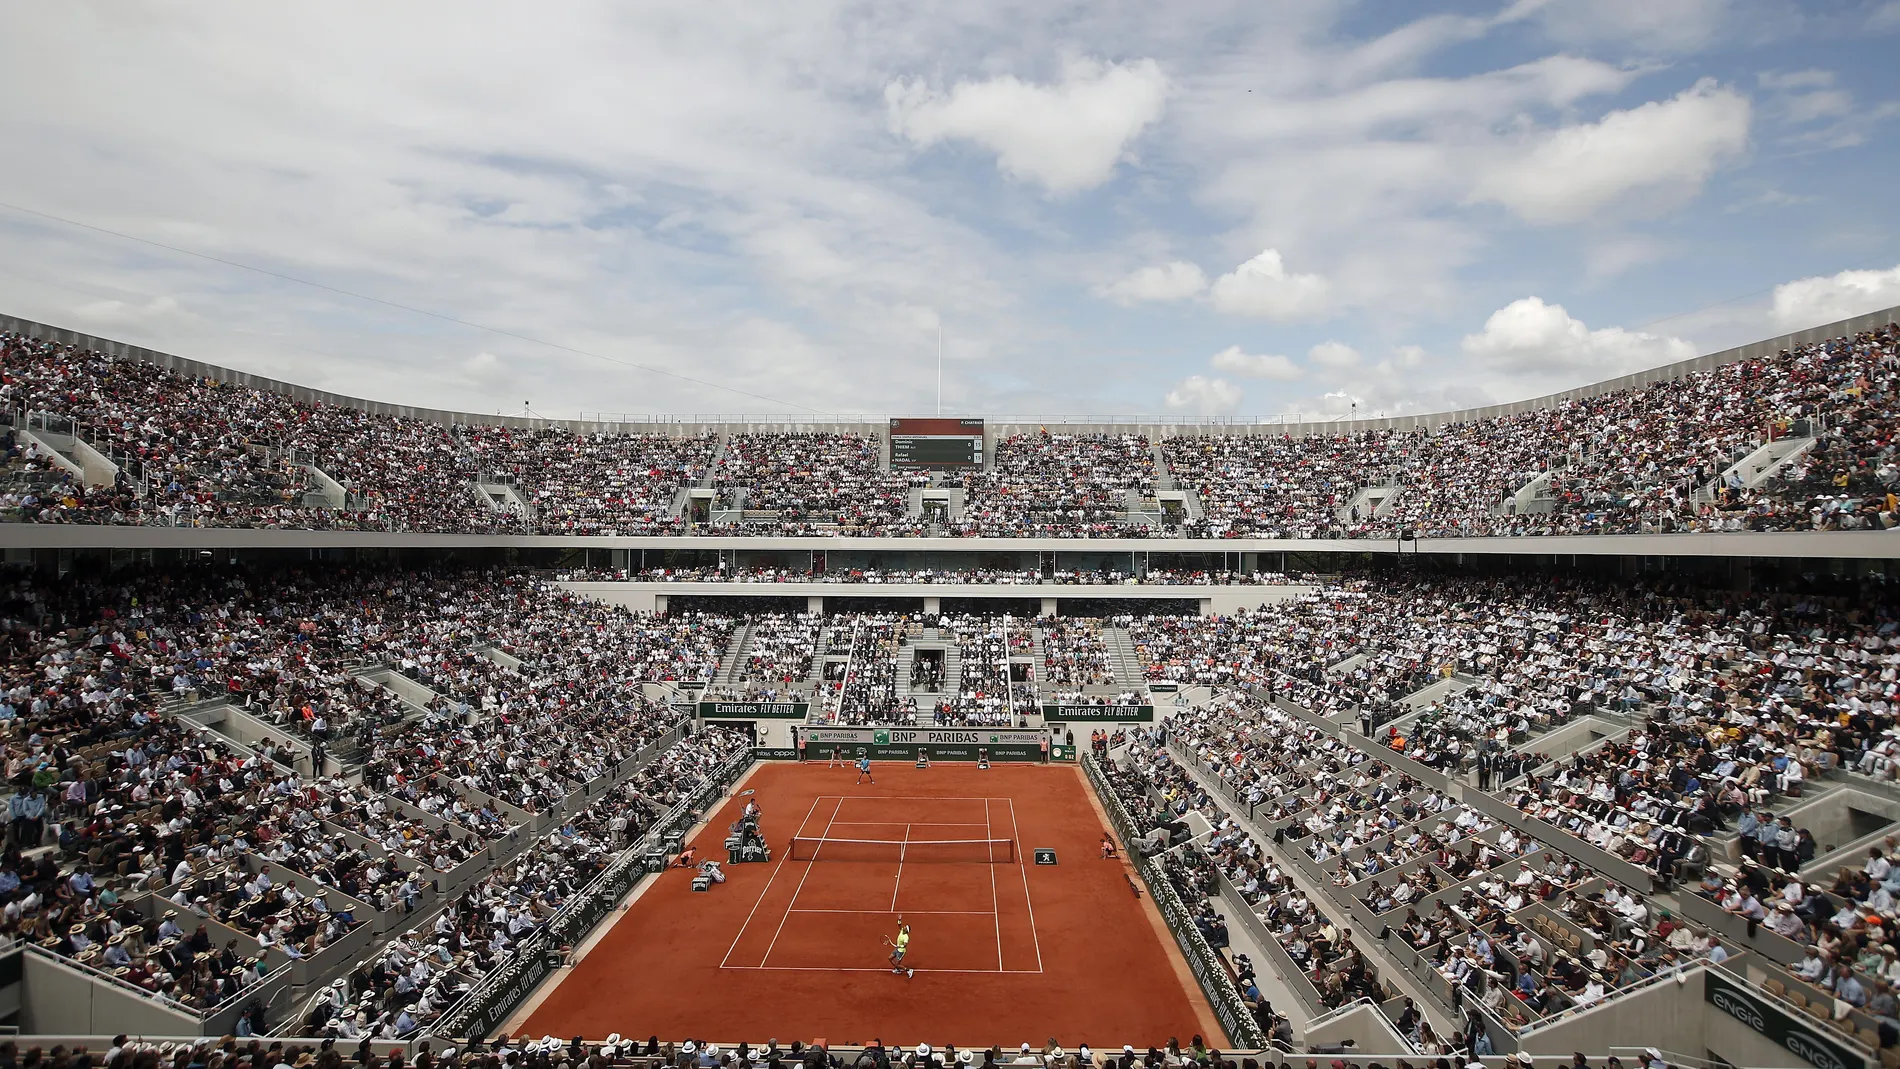 French Open tennis tournament at Roland Garros postponed amid Coronavirus pandemic